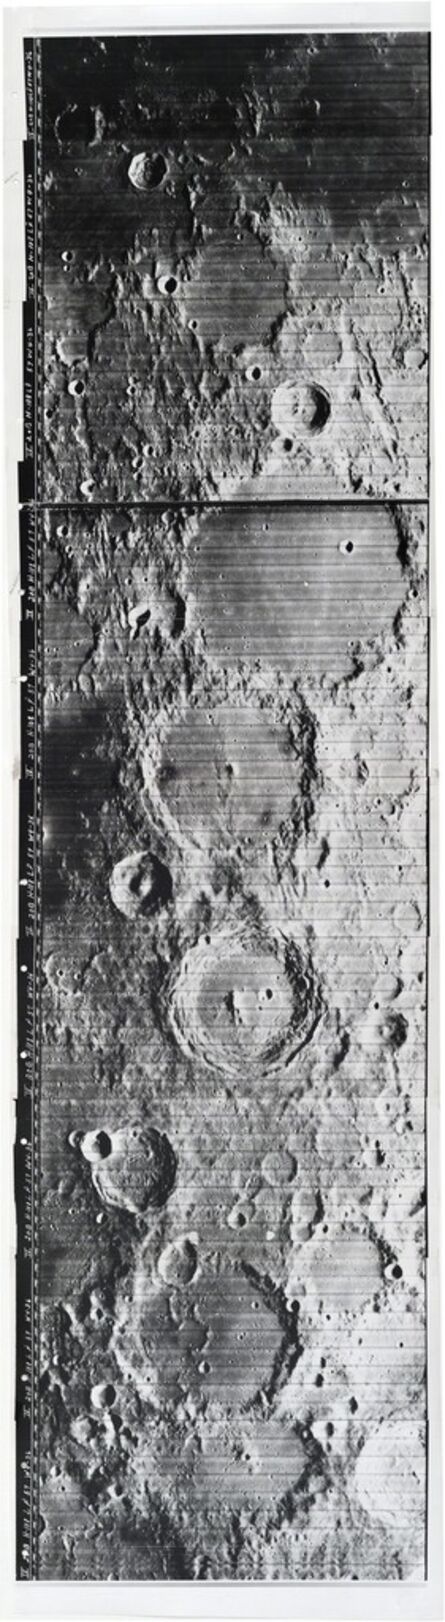 NASA, ‘Orbiter 4 · Lunar Surface’, 1967